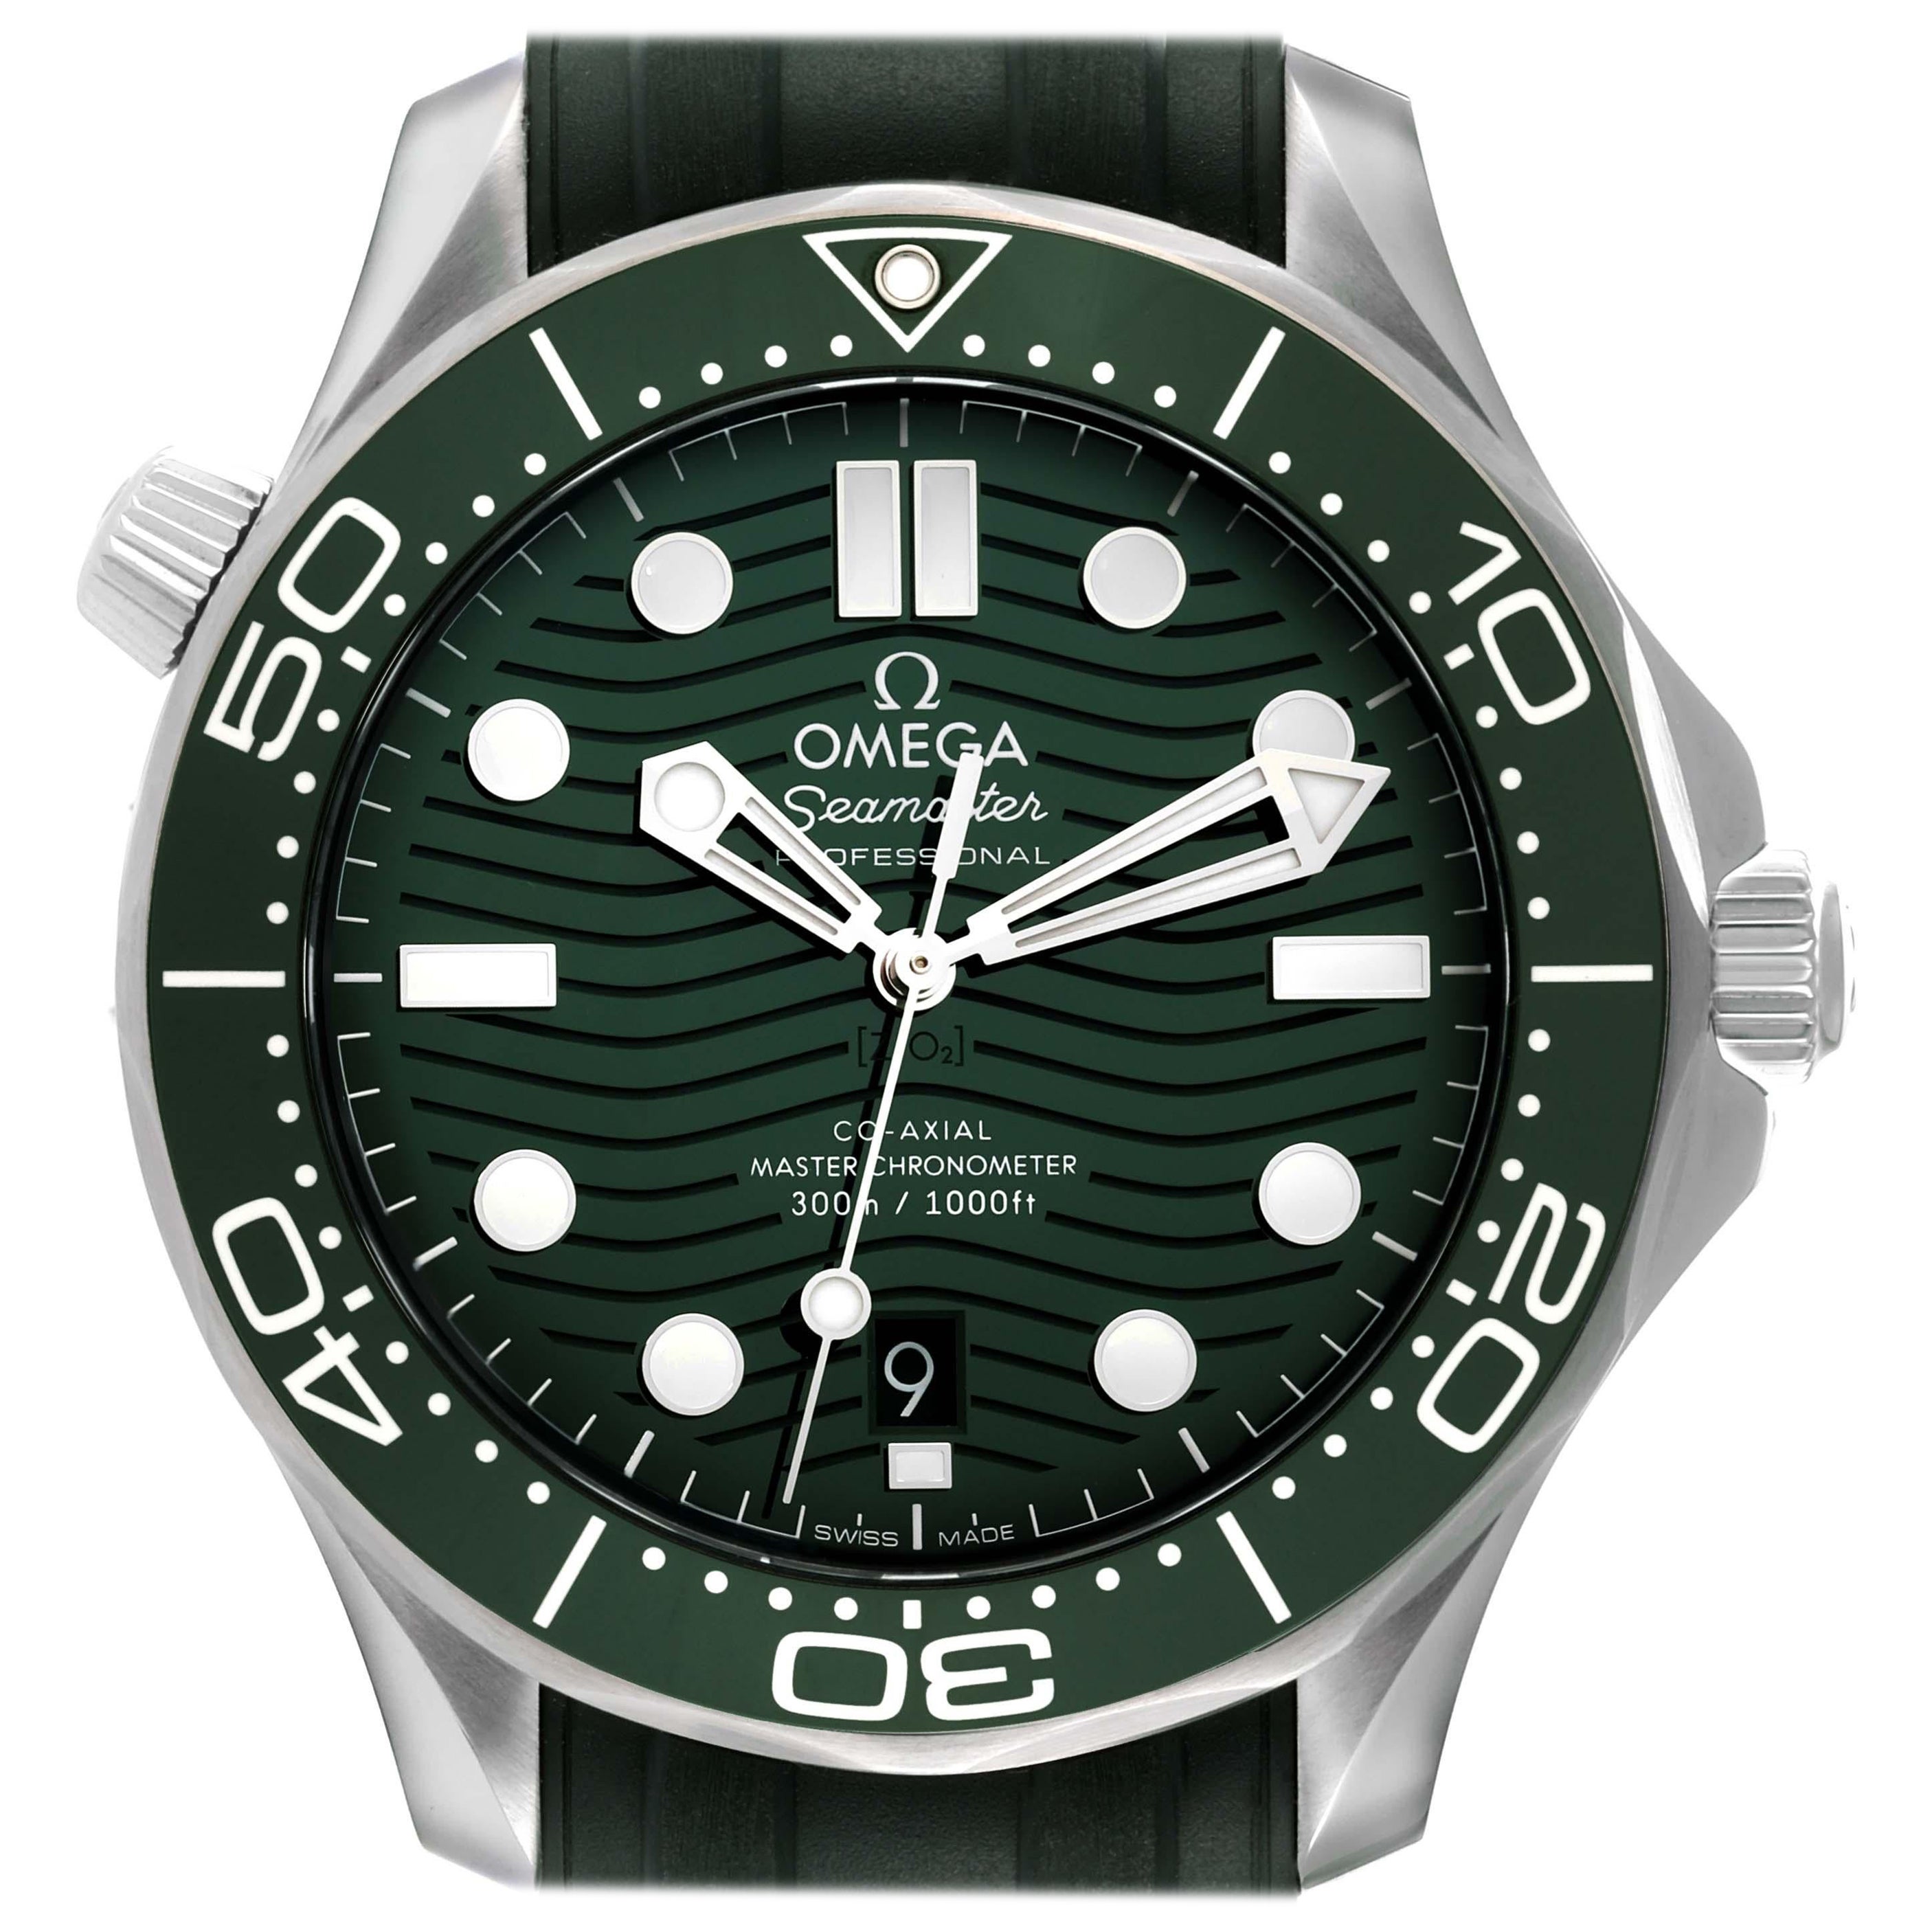 Omega Seamaster Diver Master Chronometer Mens Watch 210.32.42.20.10.001 Unworn